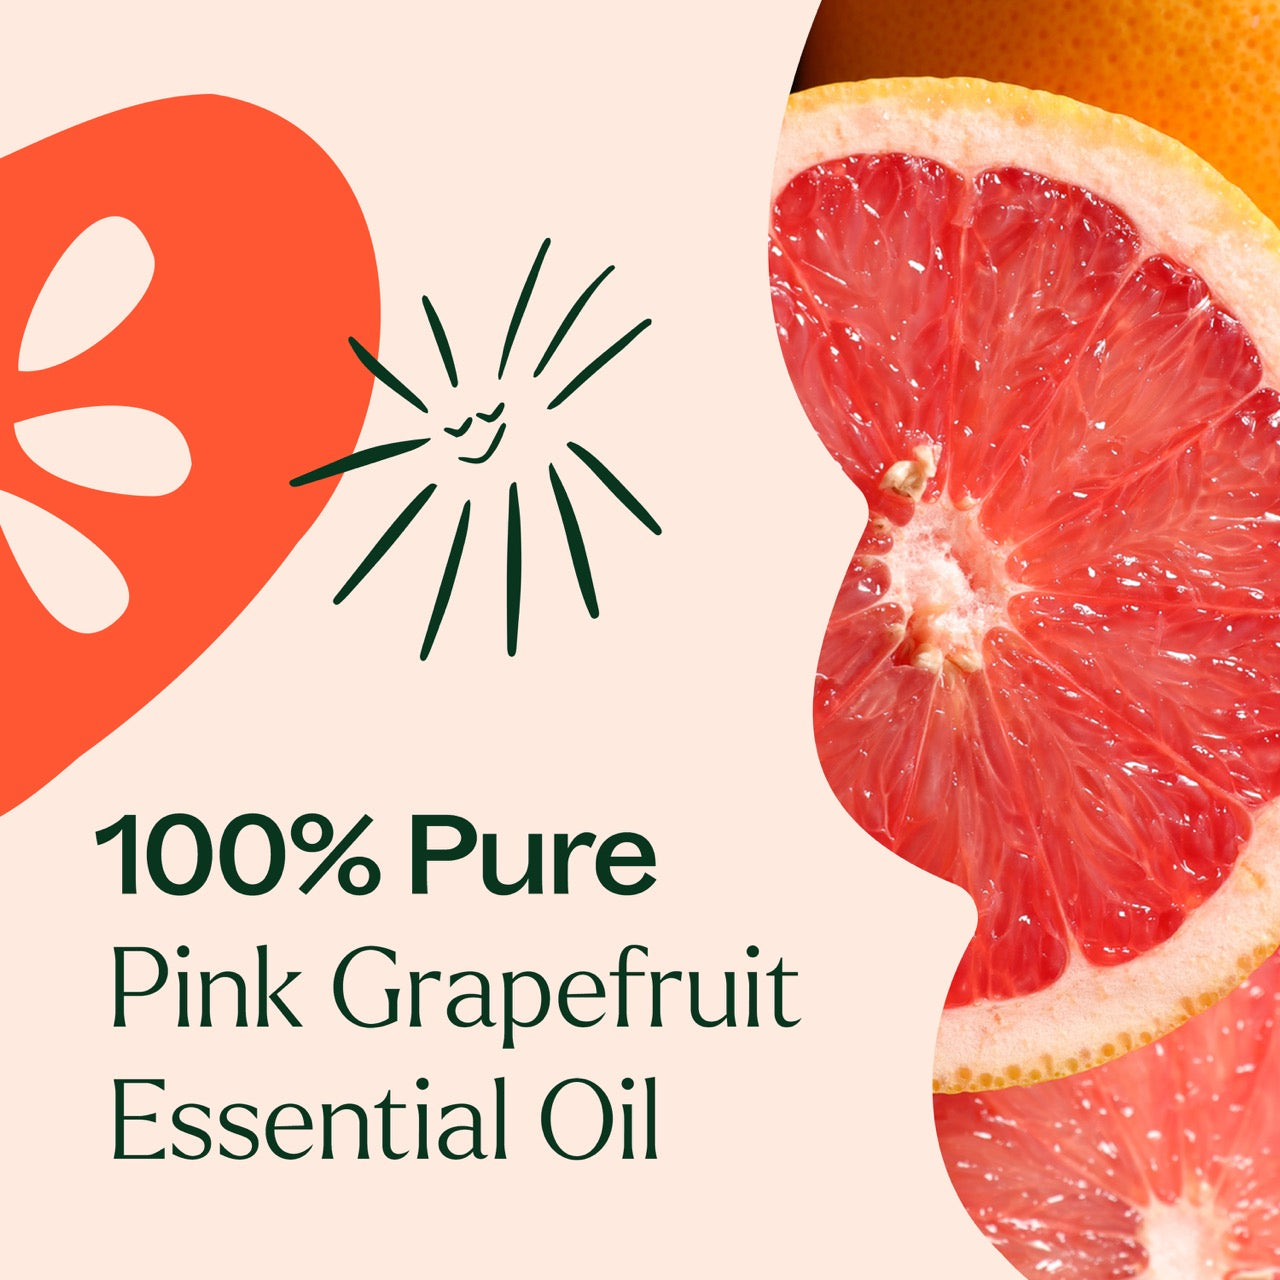 100% pure Pink Grapefruit Essential Oil